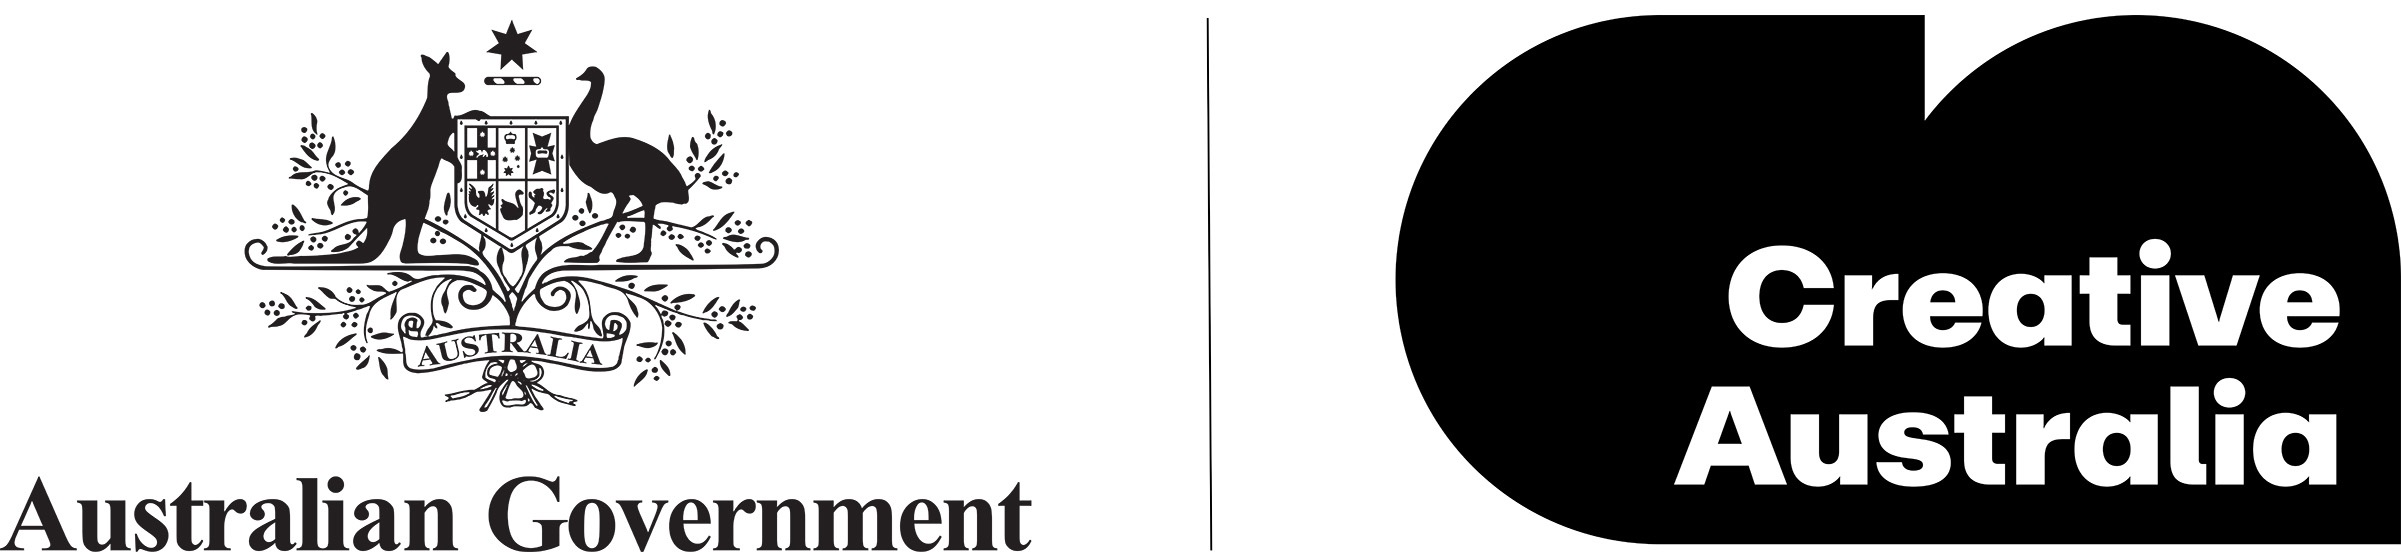 Black and white logo of Creative Australia